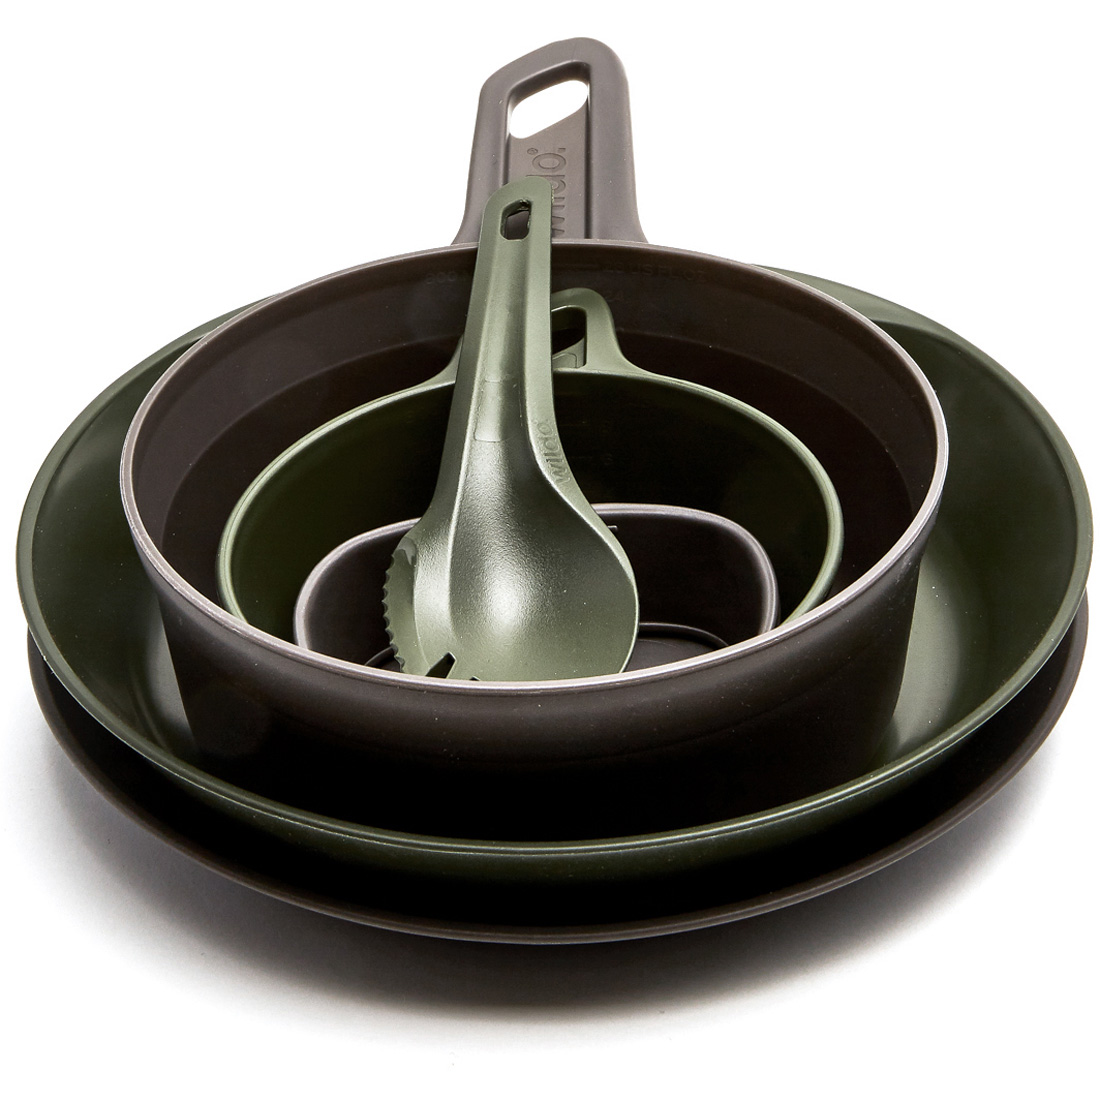 Image of Wildo Explorer Kit Multicolor Dishes - olive/ dark grey